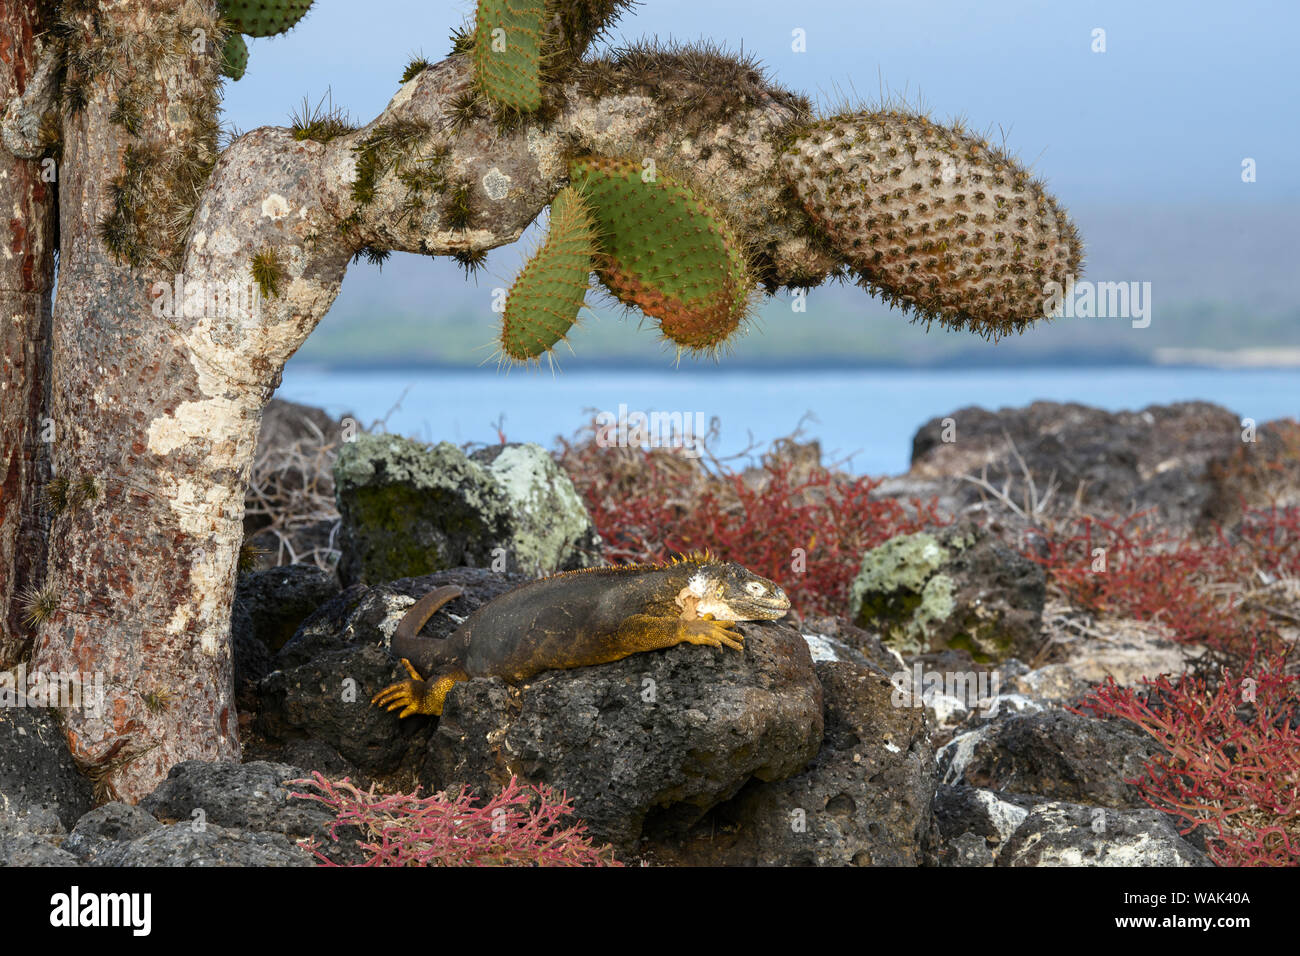 Ecuador, Galapagos Islands, Santa Fe Island. Santa Fe land iguana basking beneath favorite food source of Opuntia cactus. Stock Photo